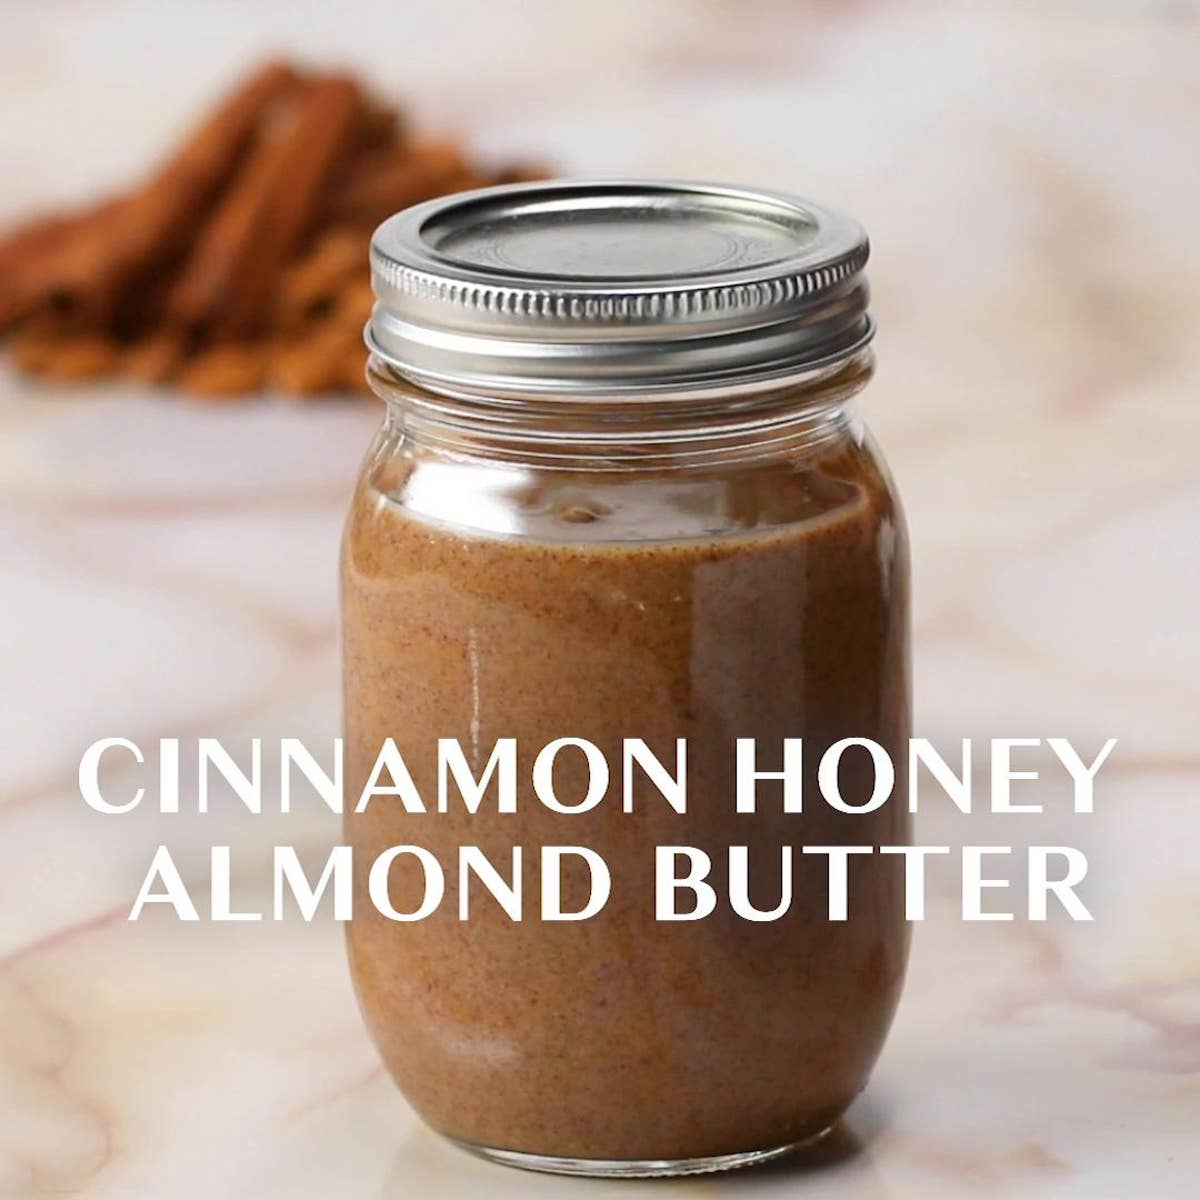 Cinnamon Honey Almond Butter Recipe by Tasty